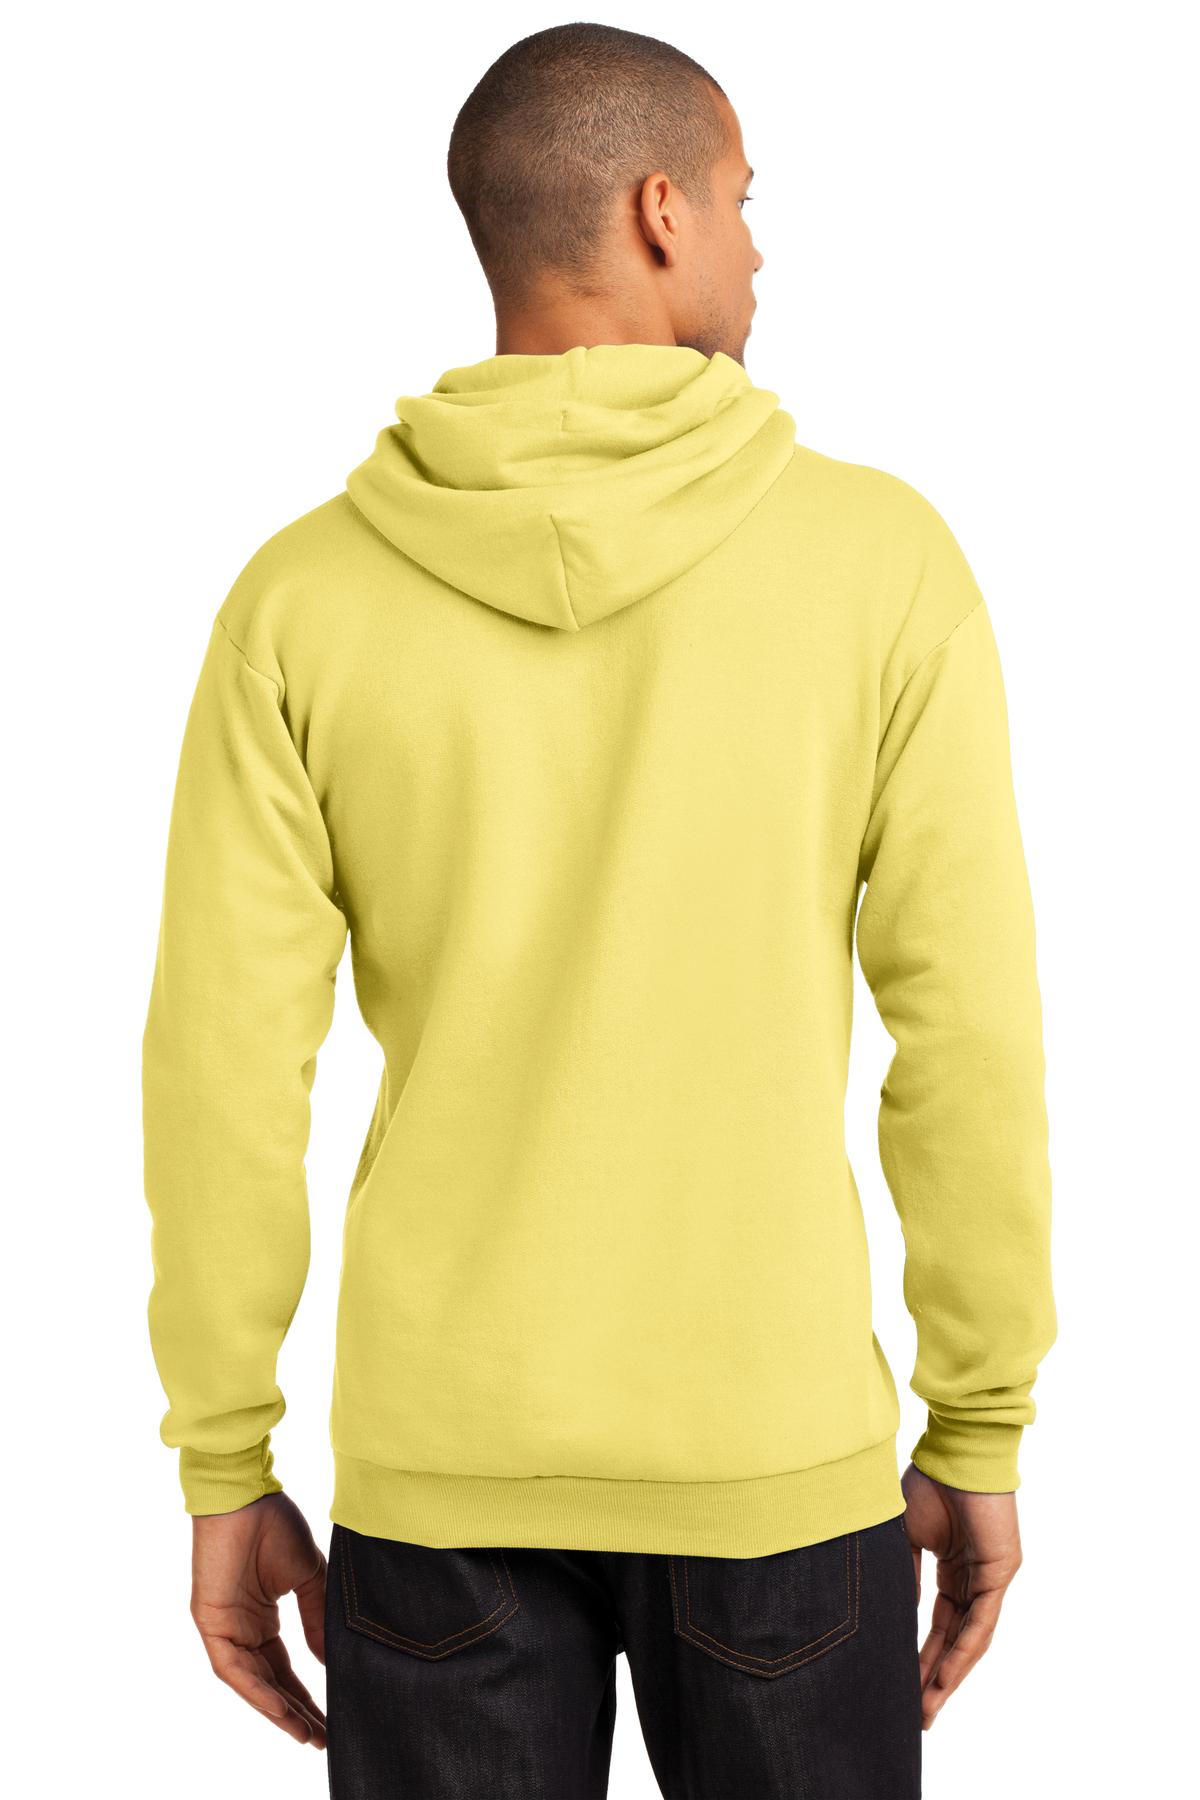 Port & Company - Core Fleece Pullover Hooded Sweatshirt. PC78H - Yellow